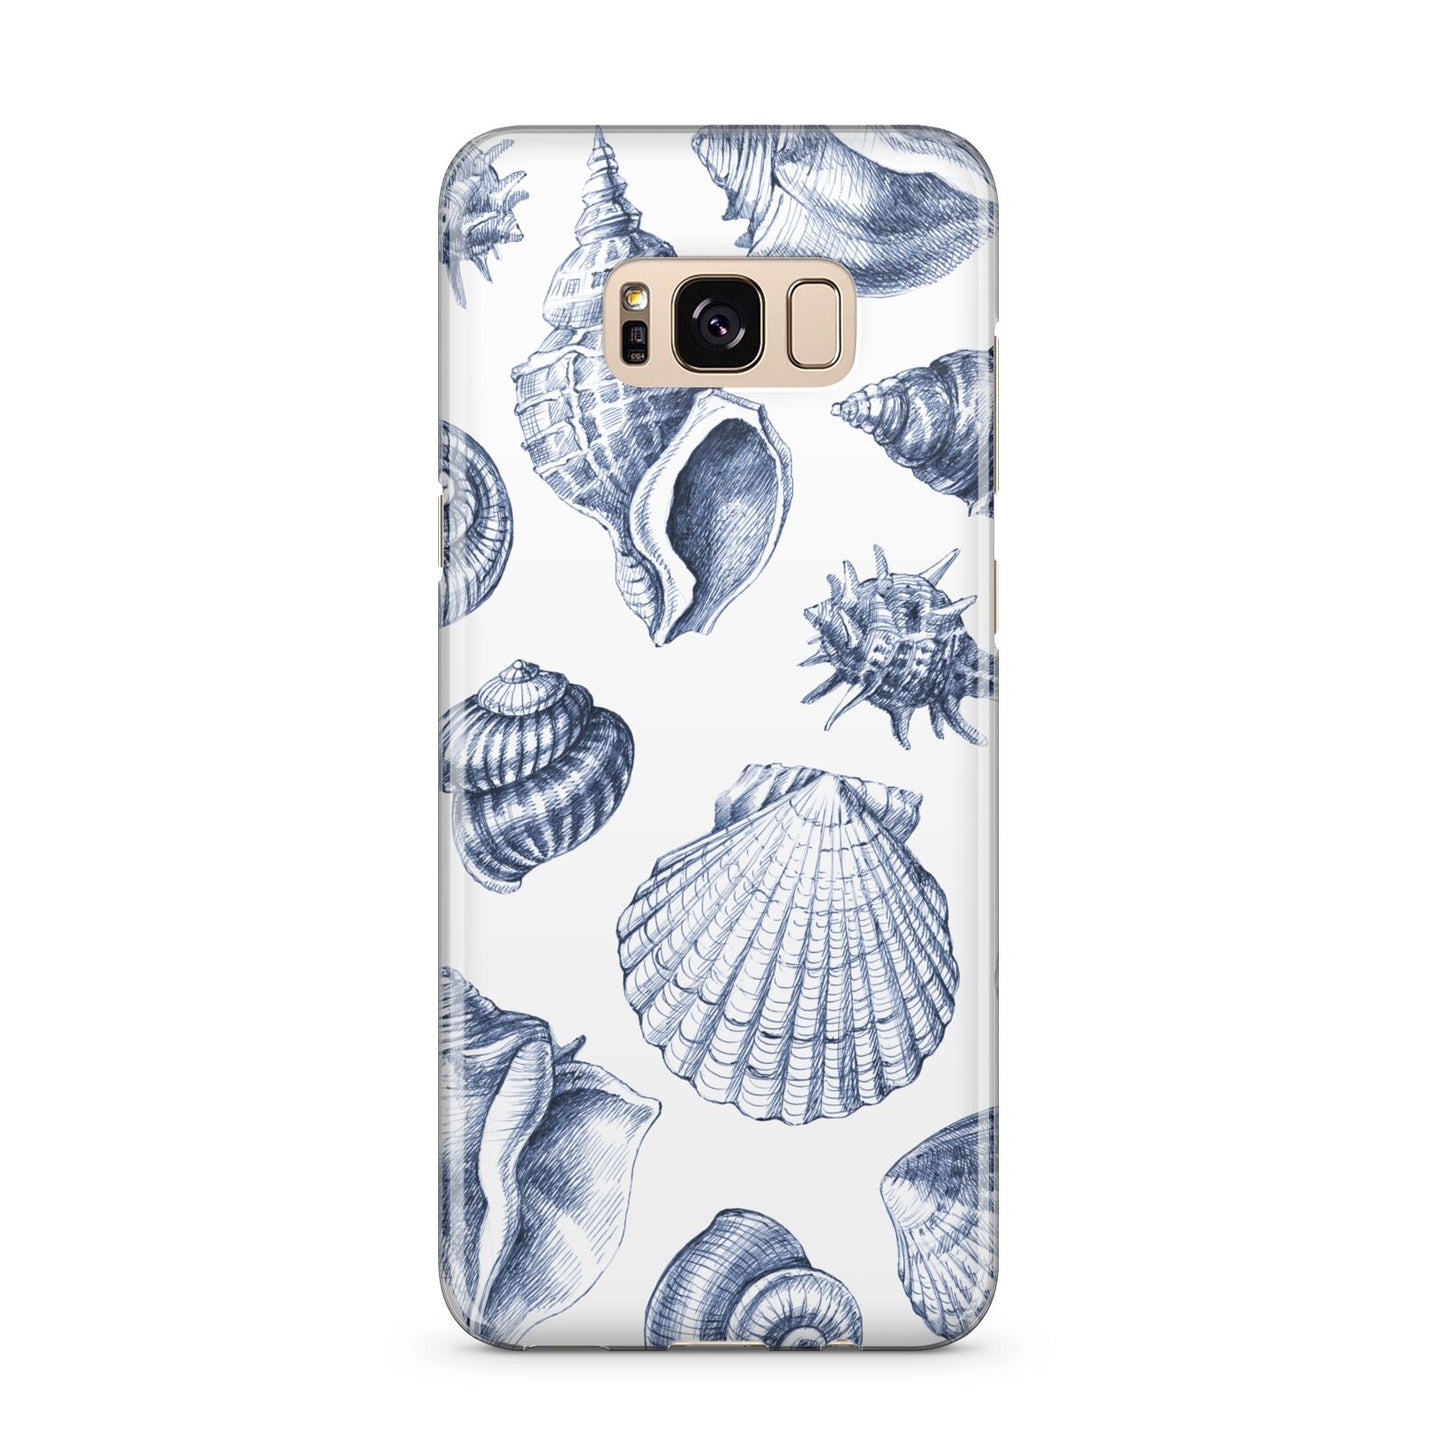 Shell Samsung Galaxy S8 Plus Case